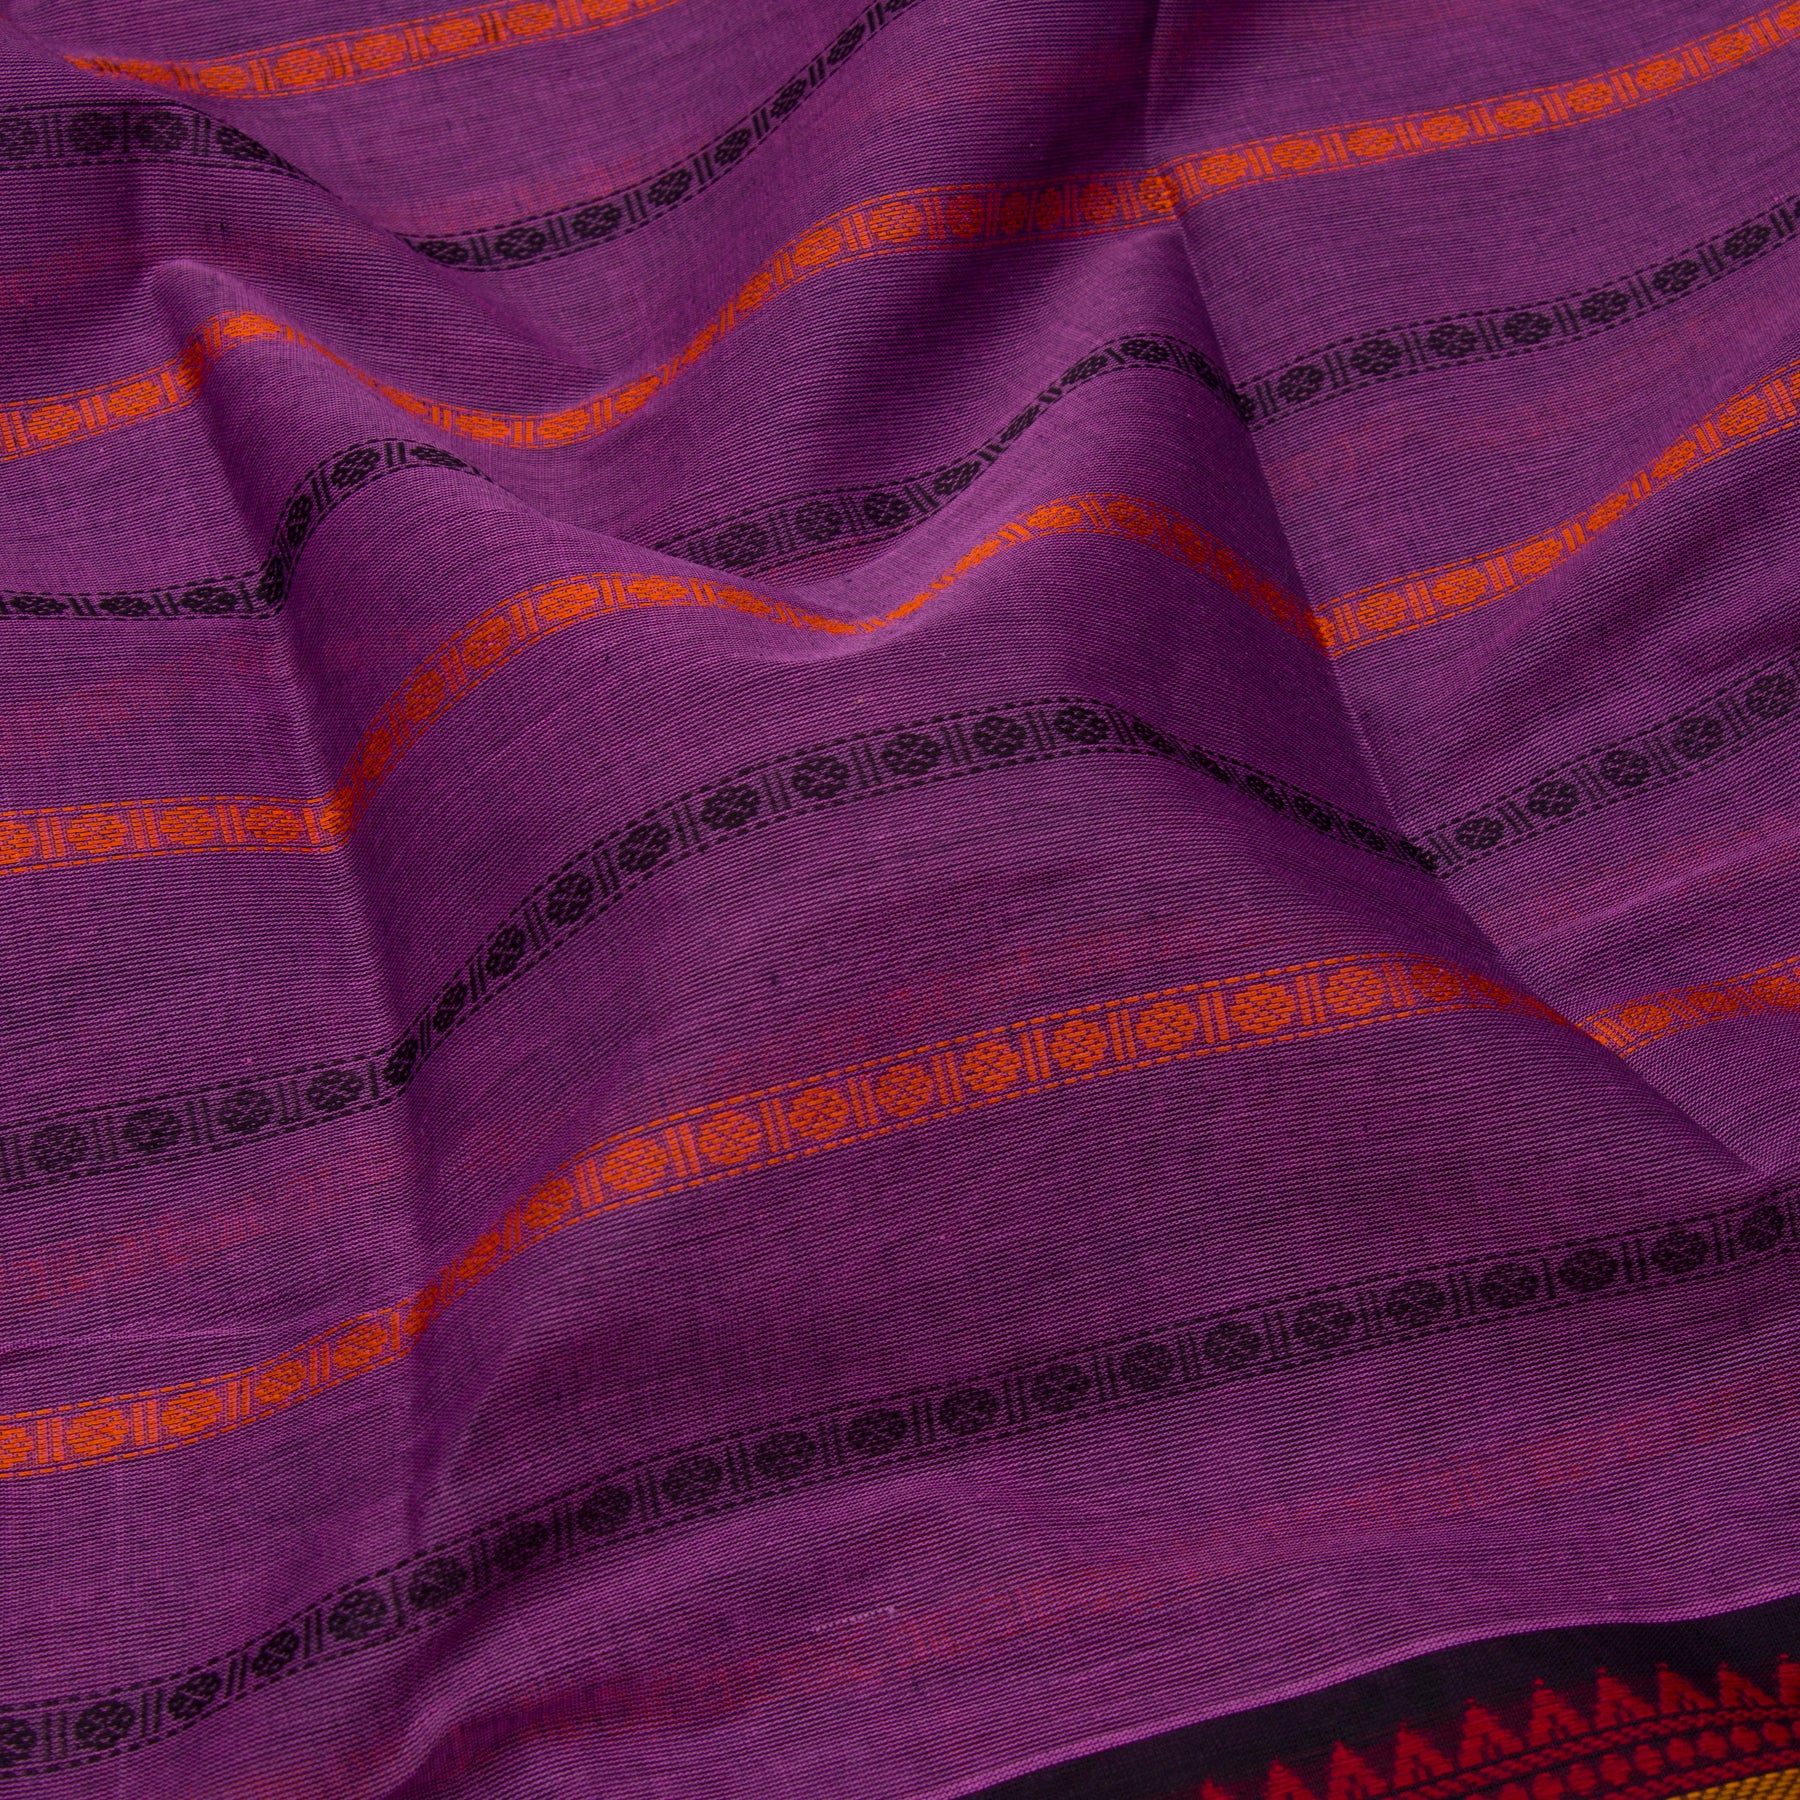 Kanakavalli Kanchi Cotton Sari 23-613-HS003-08619 - Fabric View